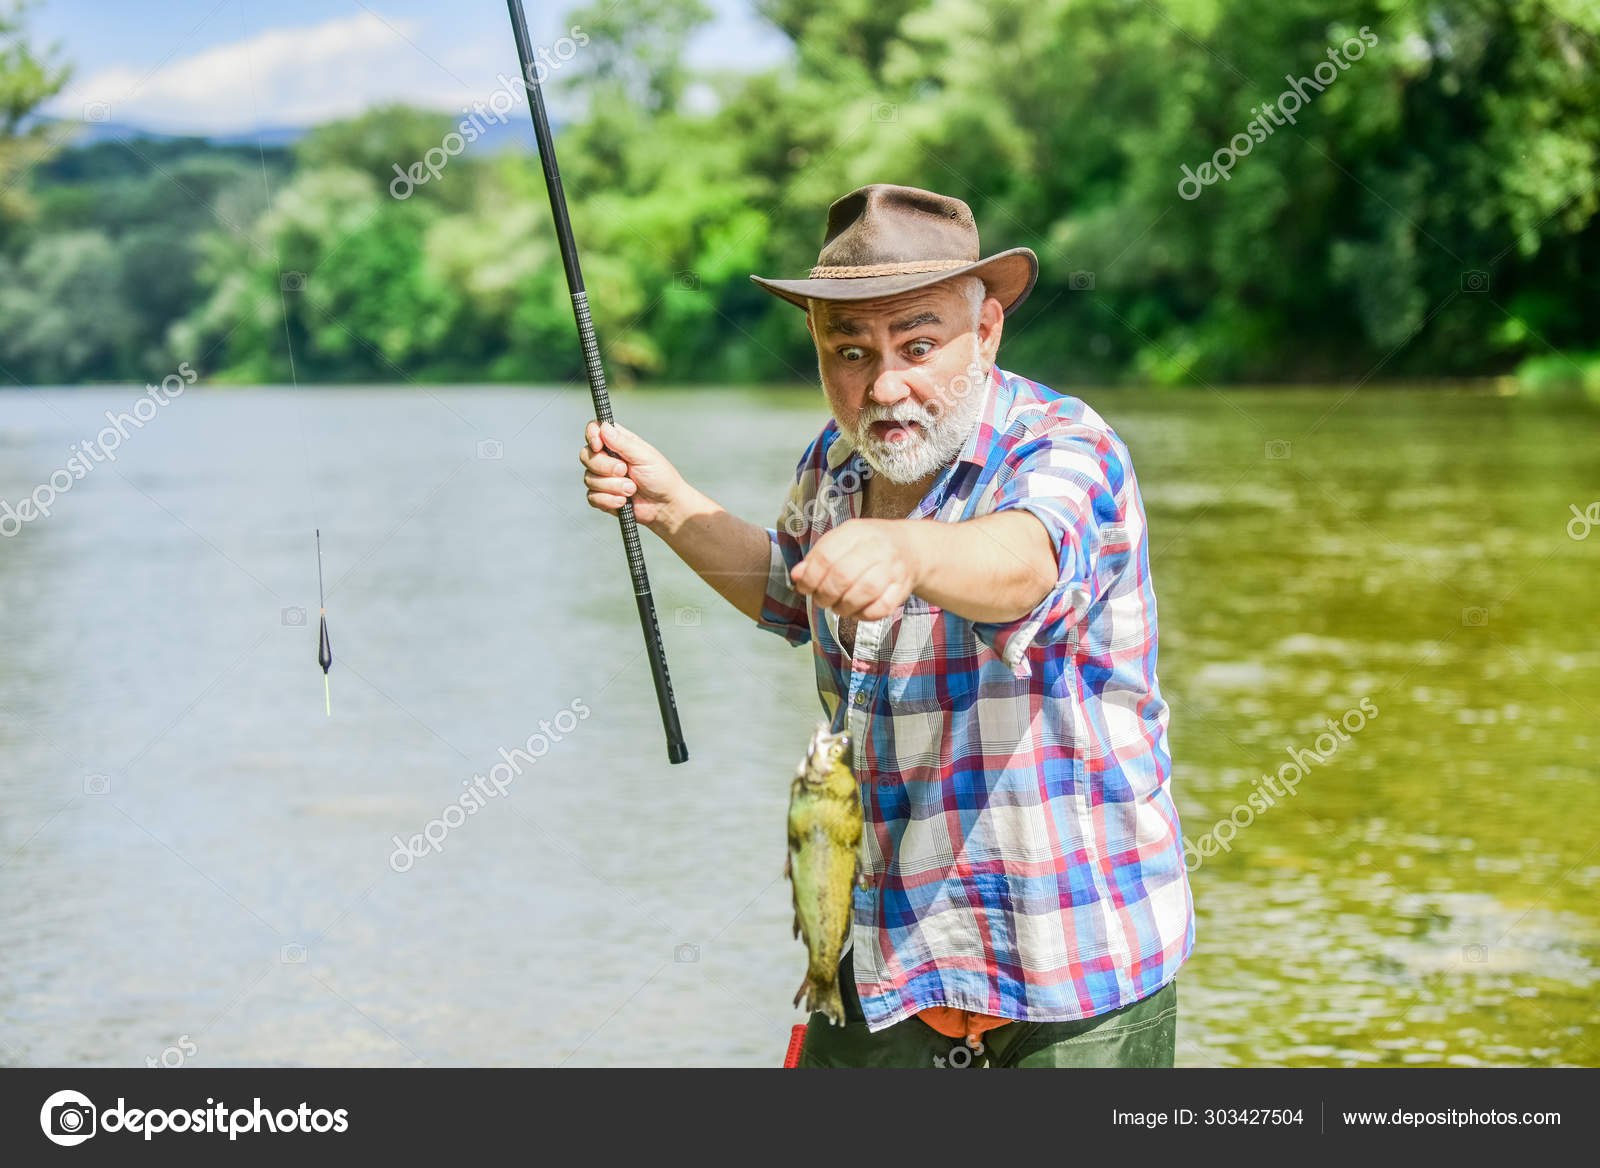 Fisherman with fishing rod. Activity and hobby. Fishing freshwater